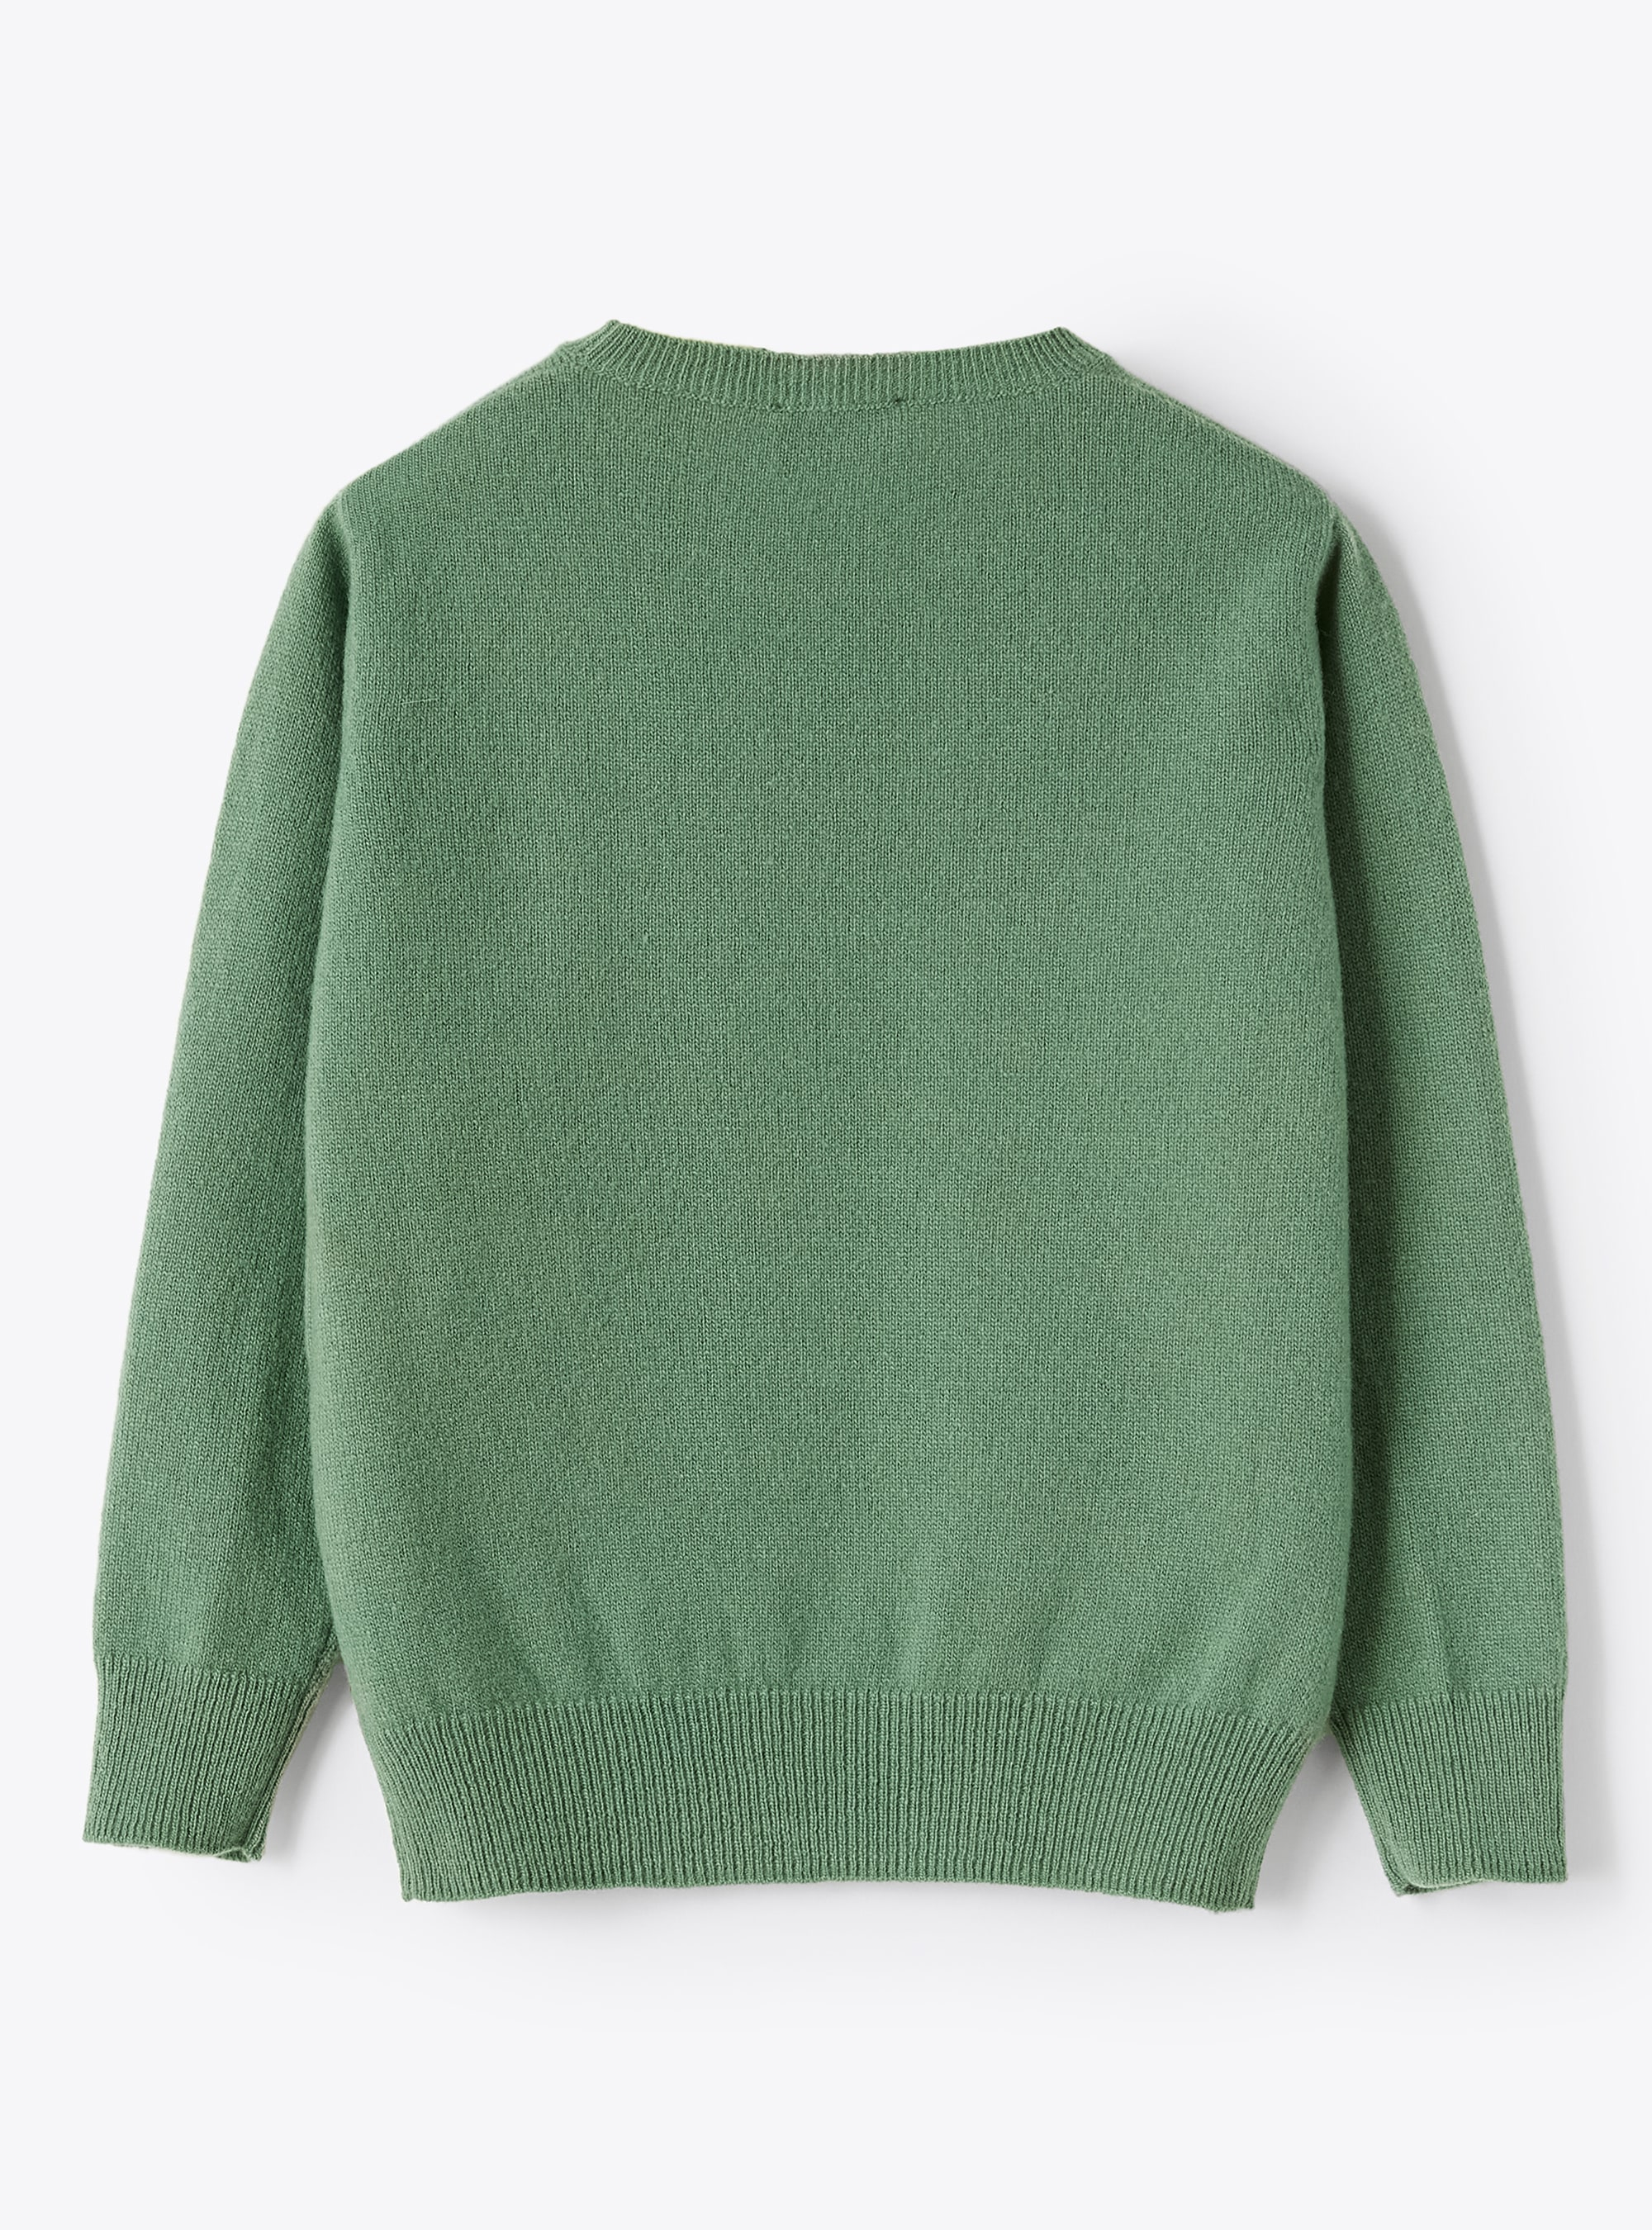 Green crew neck wool sweater - Green | Il Gufo